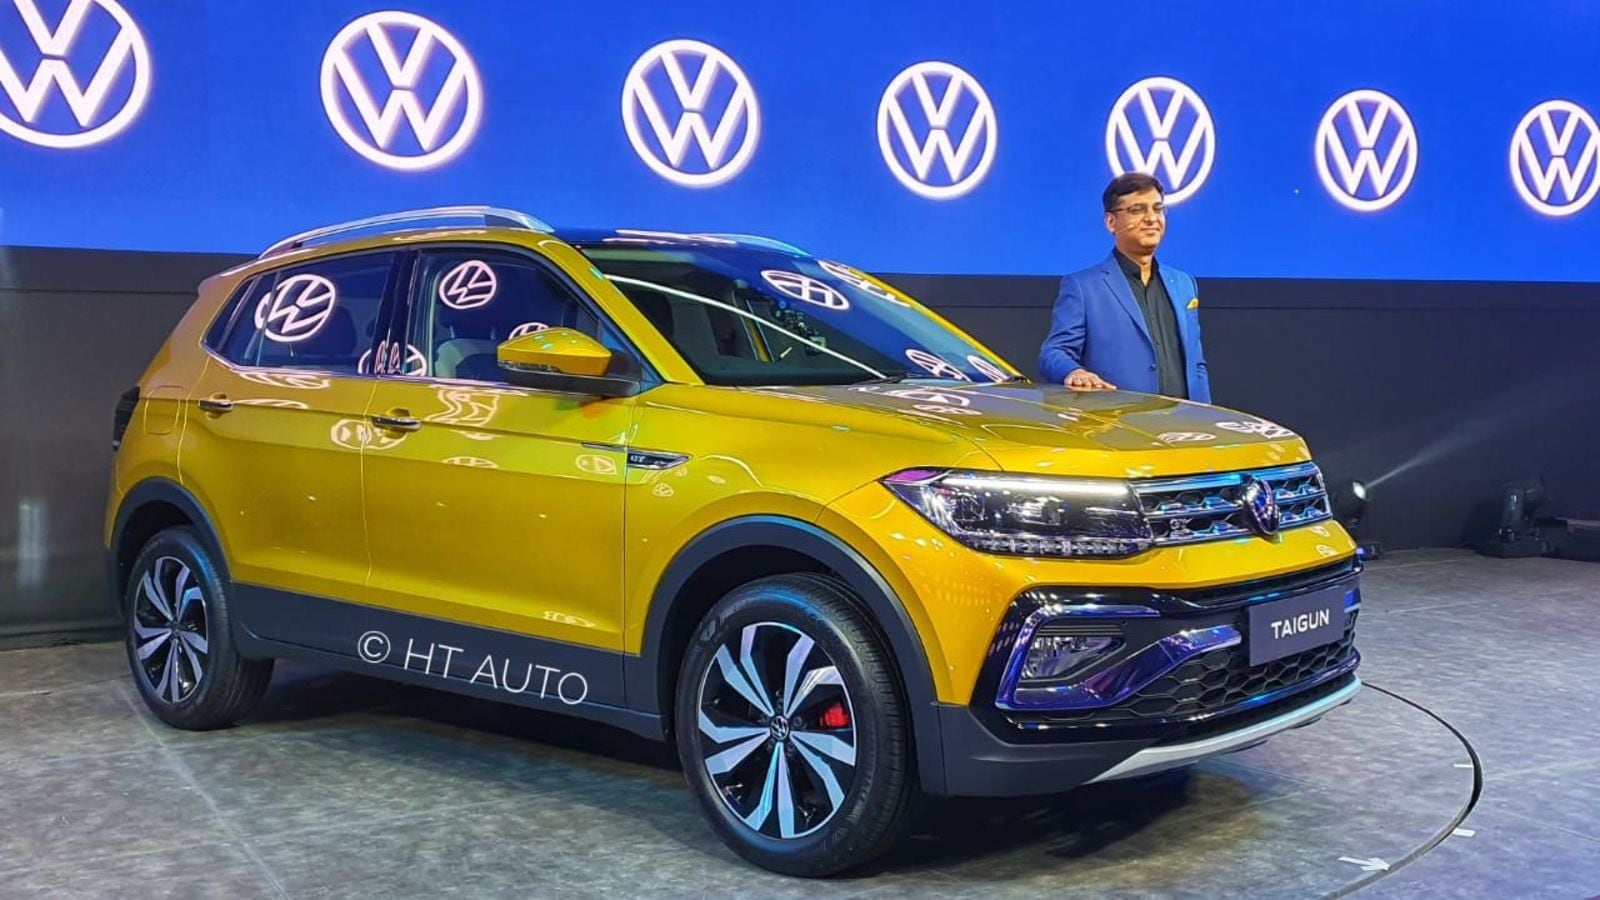 Volkswagen Taigun Launched Volkswagen Taigun Suv Price Specs